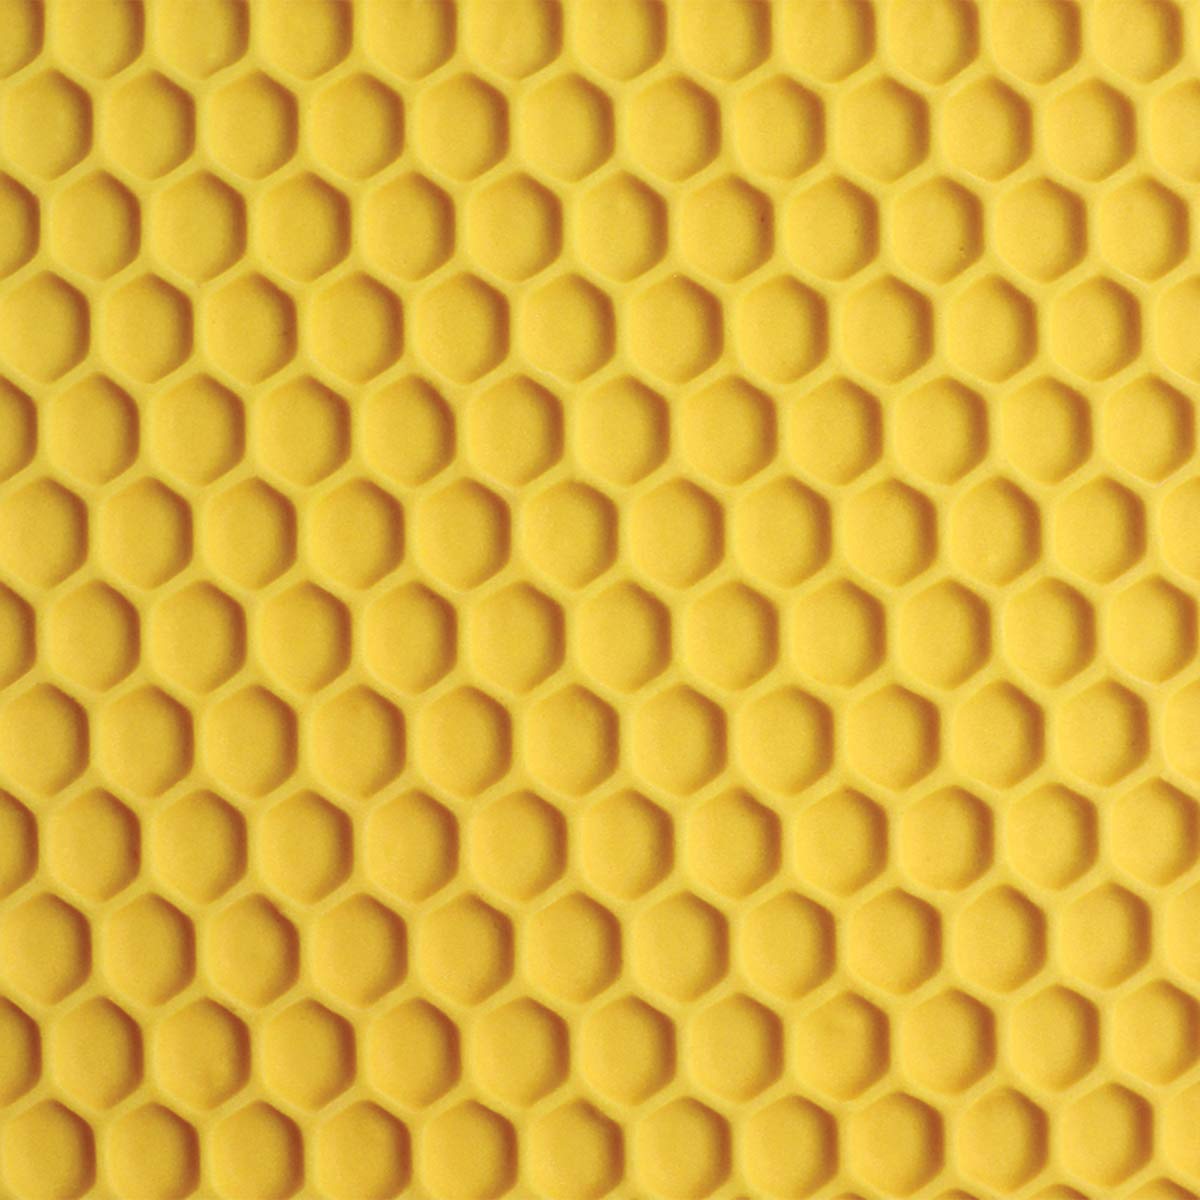 PME Honeycomb Design Impression Mat, Yellow